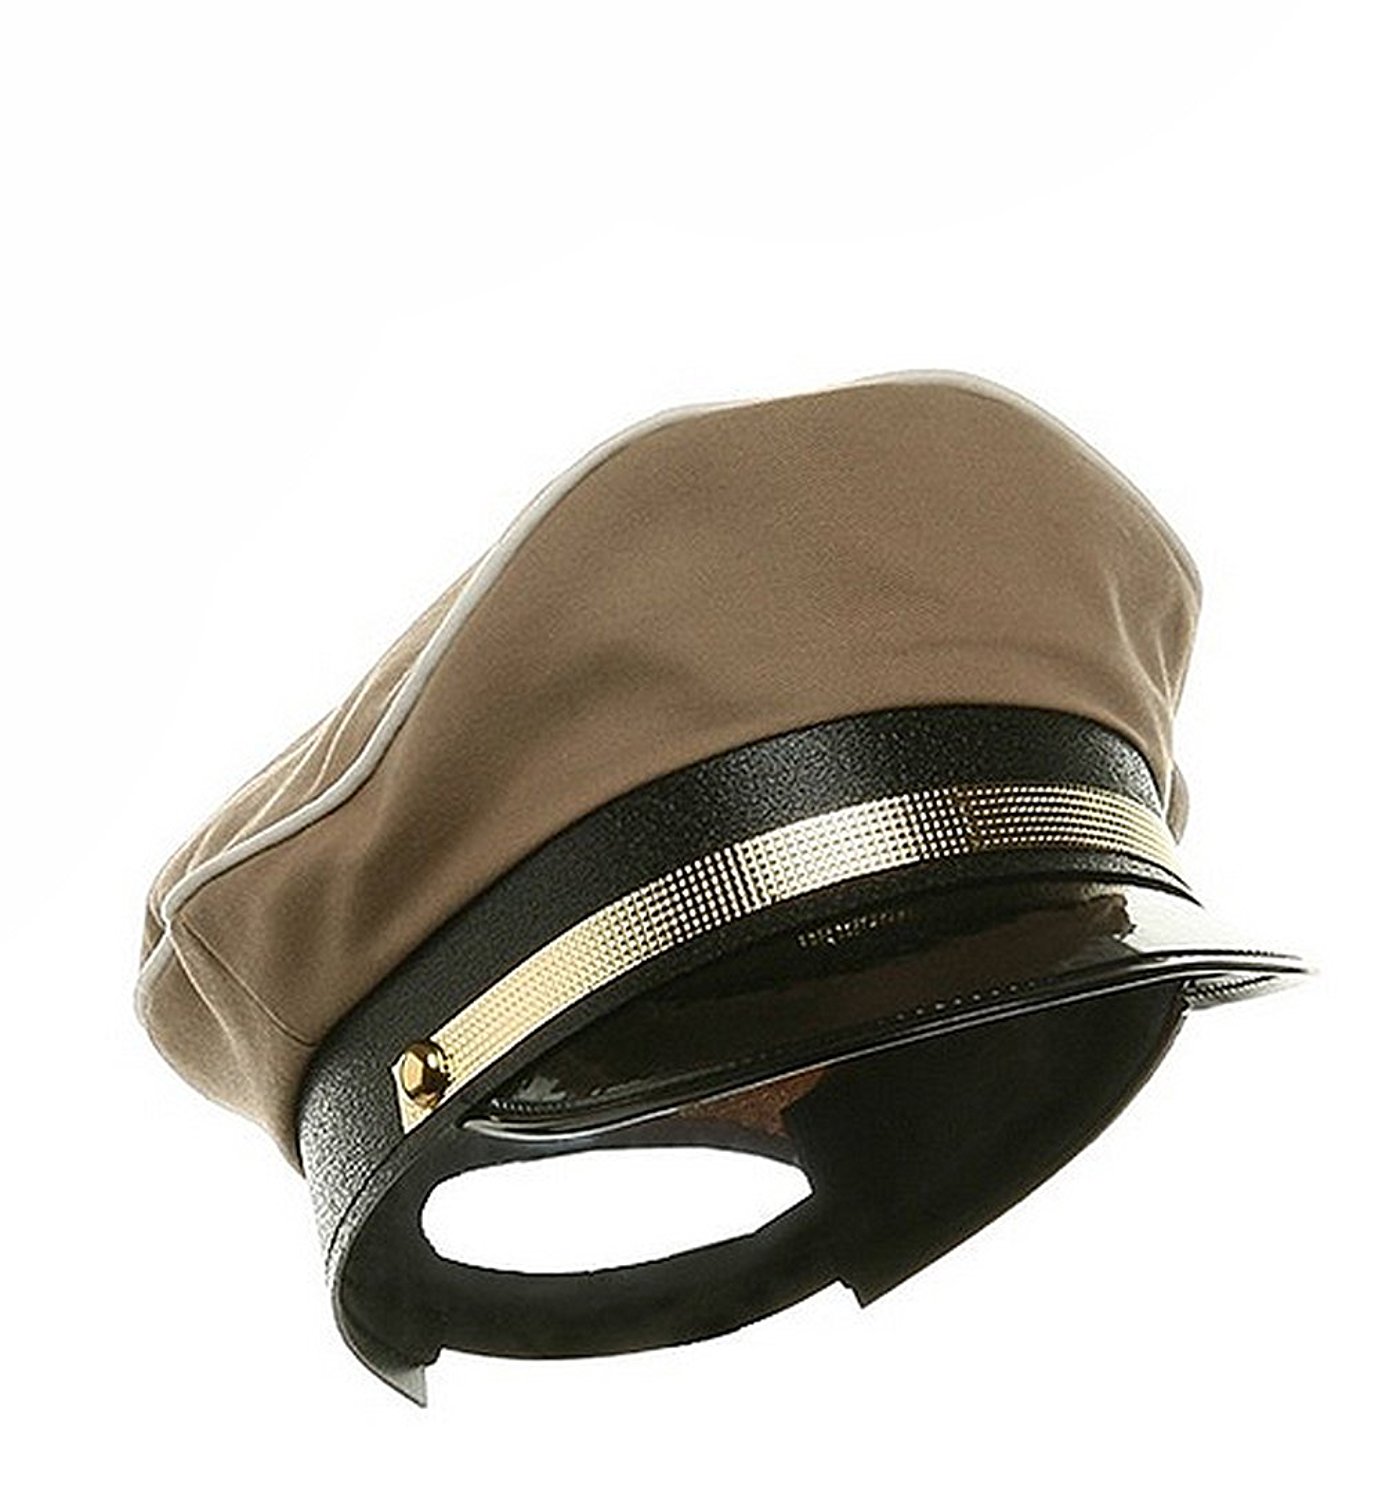 Amazon.com: J17358 (Khaki tan) Officers Hat: Clothing